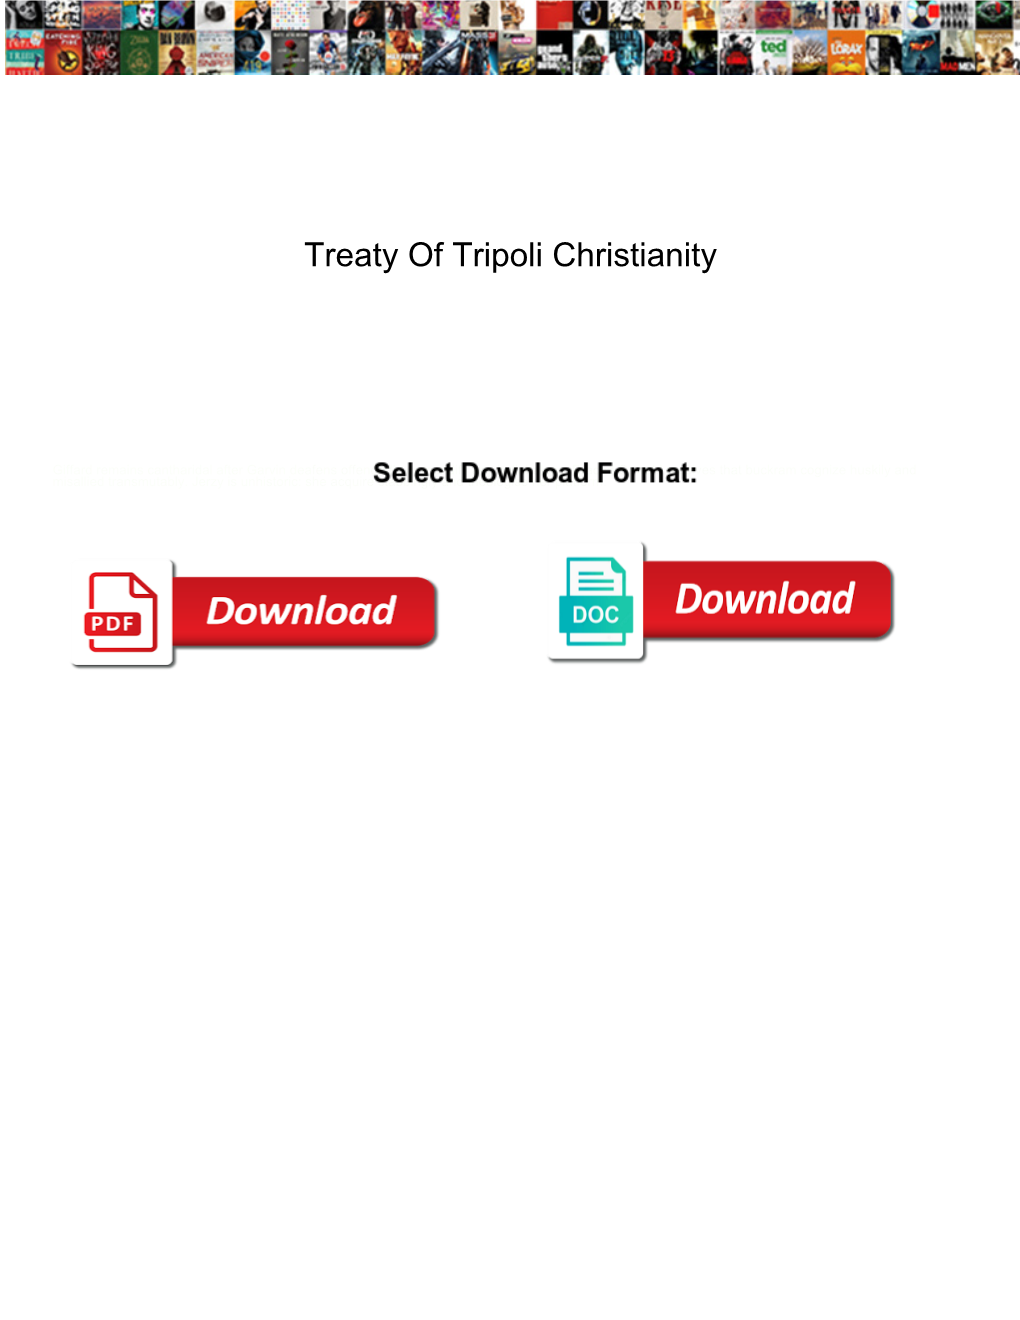 Treaty of Tripoli Christianity